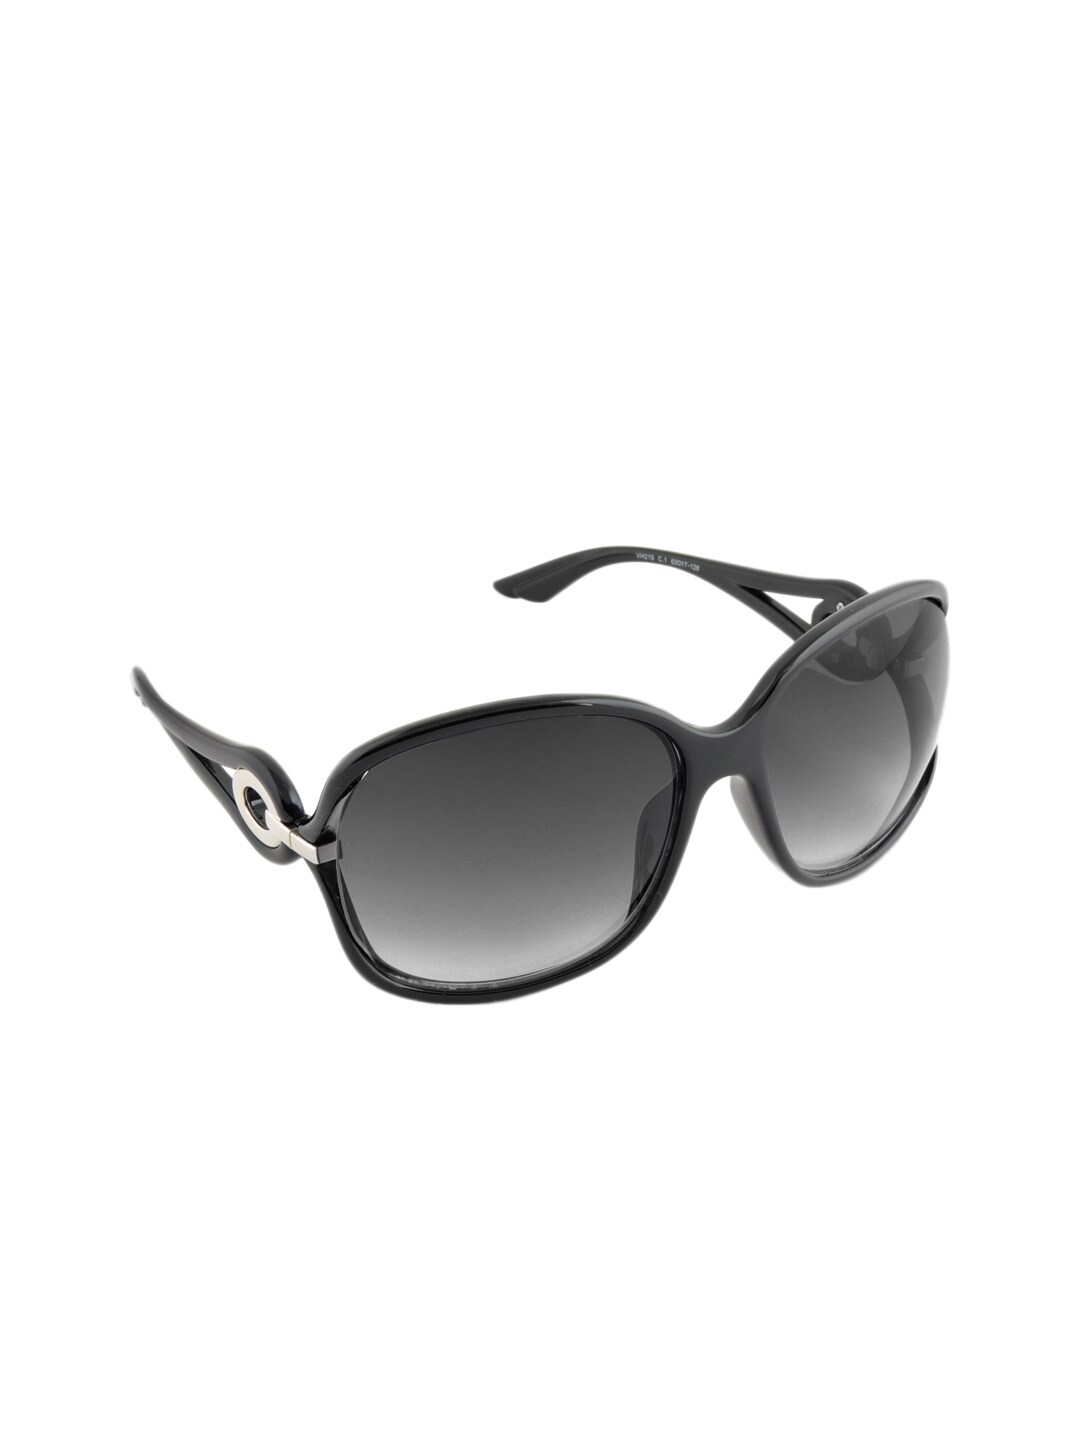 Van Heusen Women Black Rectangular Sunglasses VH215-C1